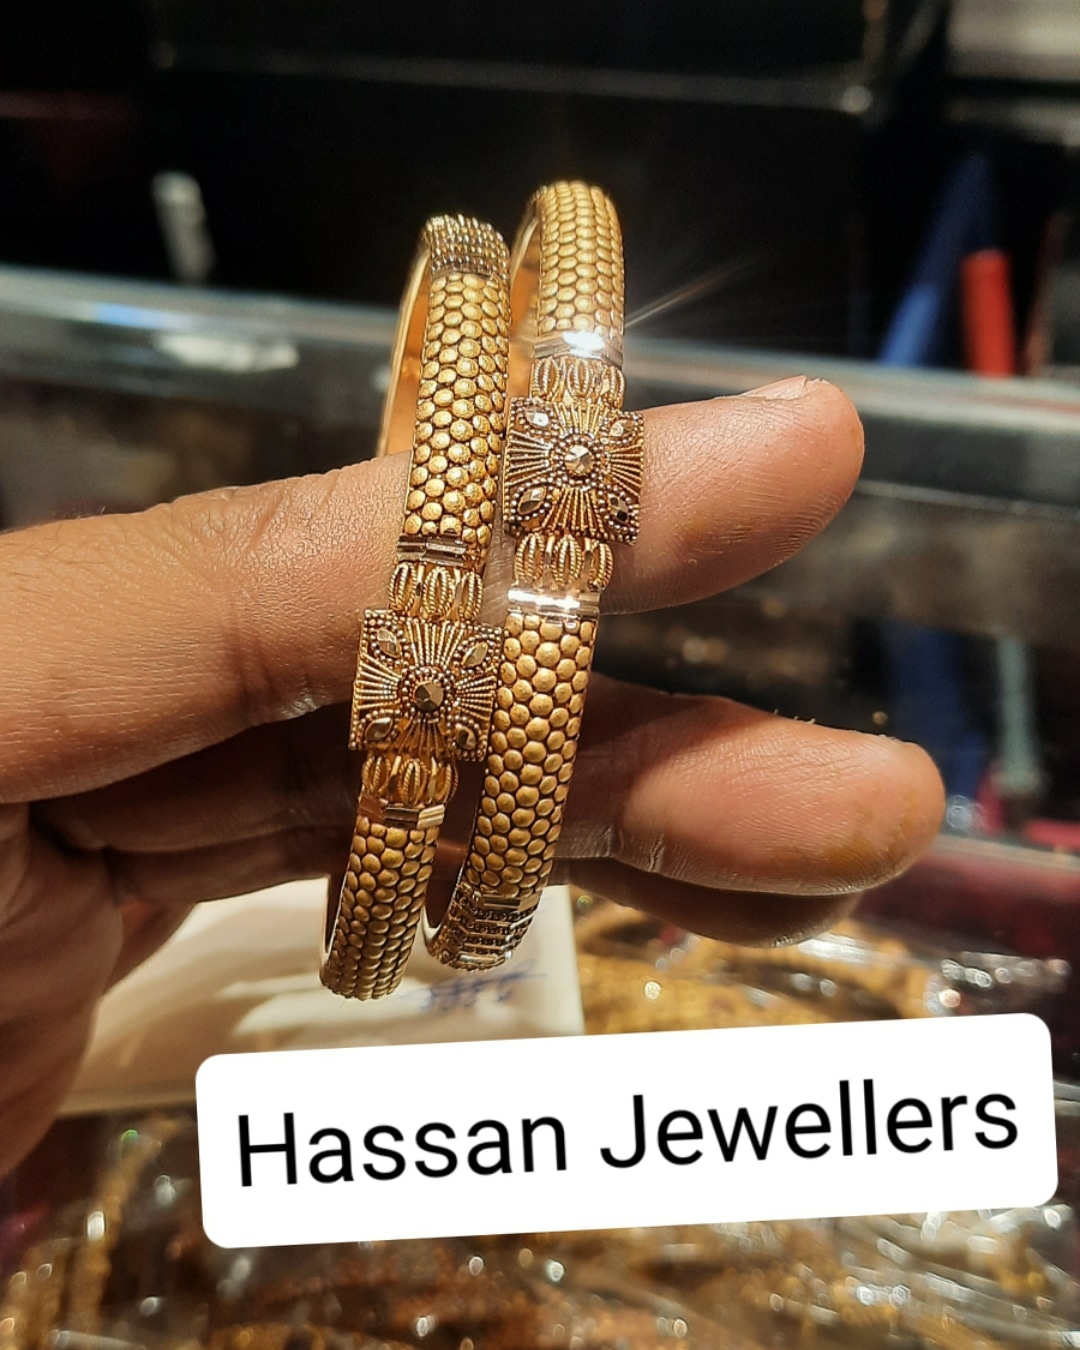 Hassan Jewellers